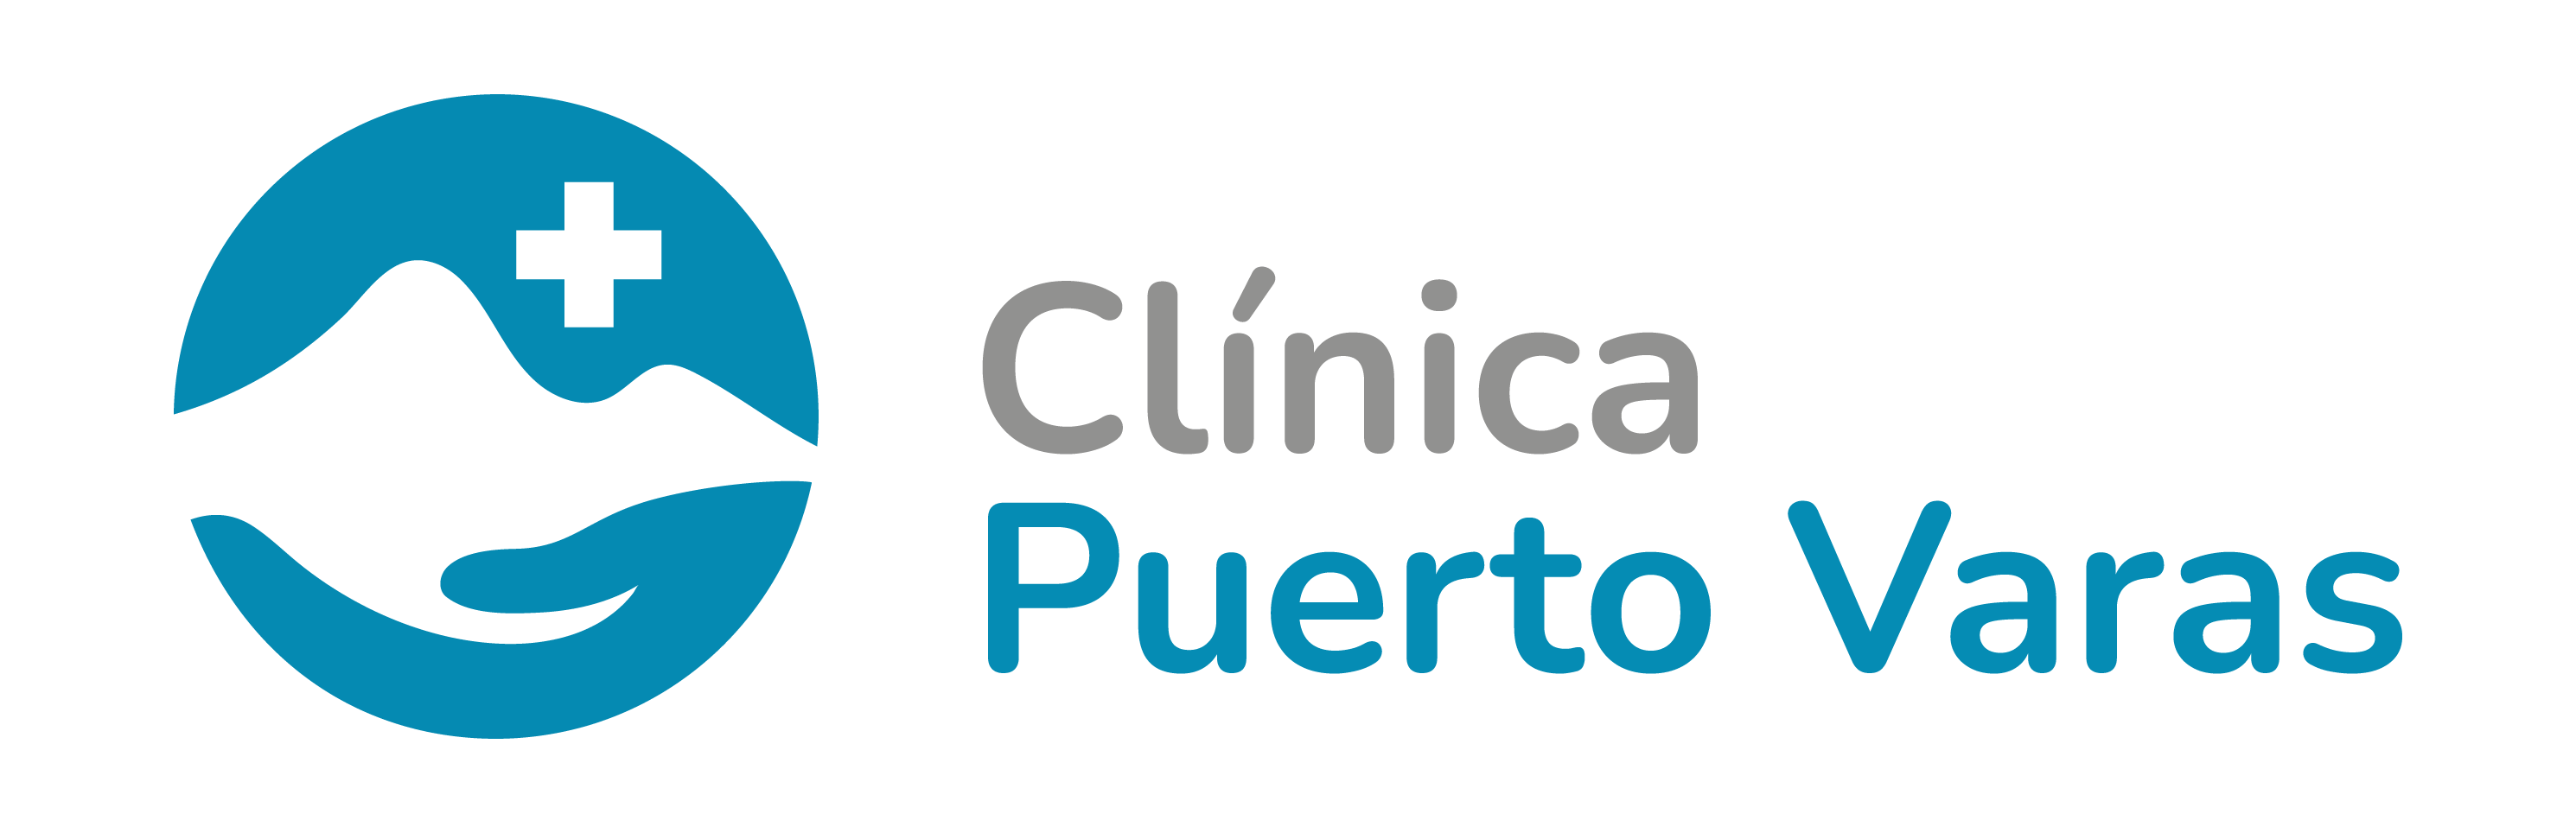 Logo_Clinica_Puerto_Varas_RGB_ALTA